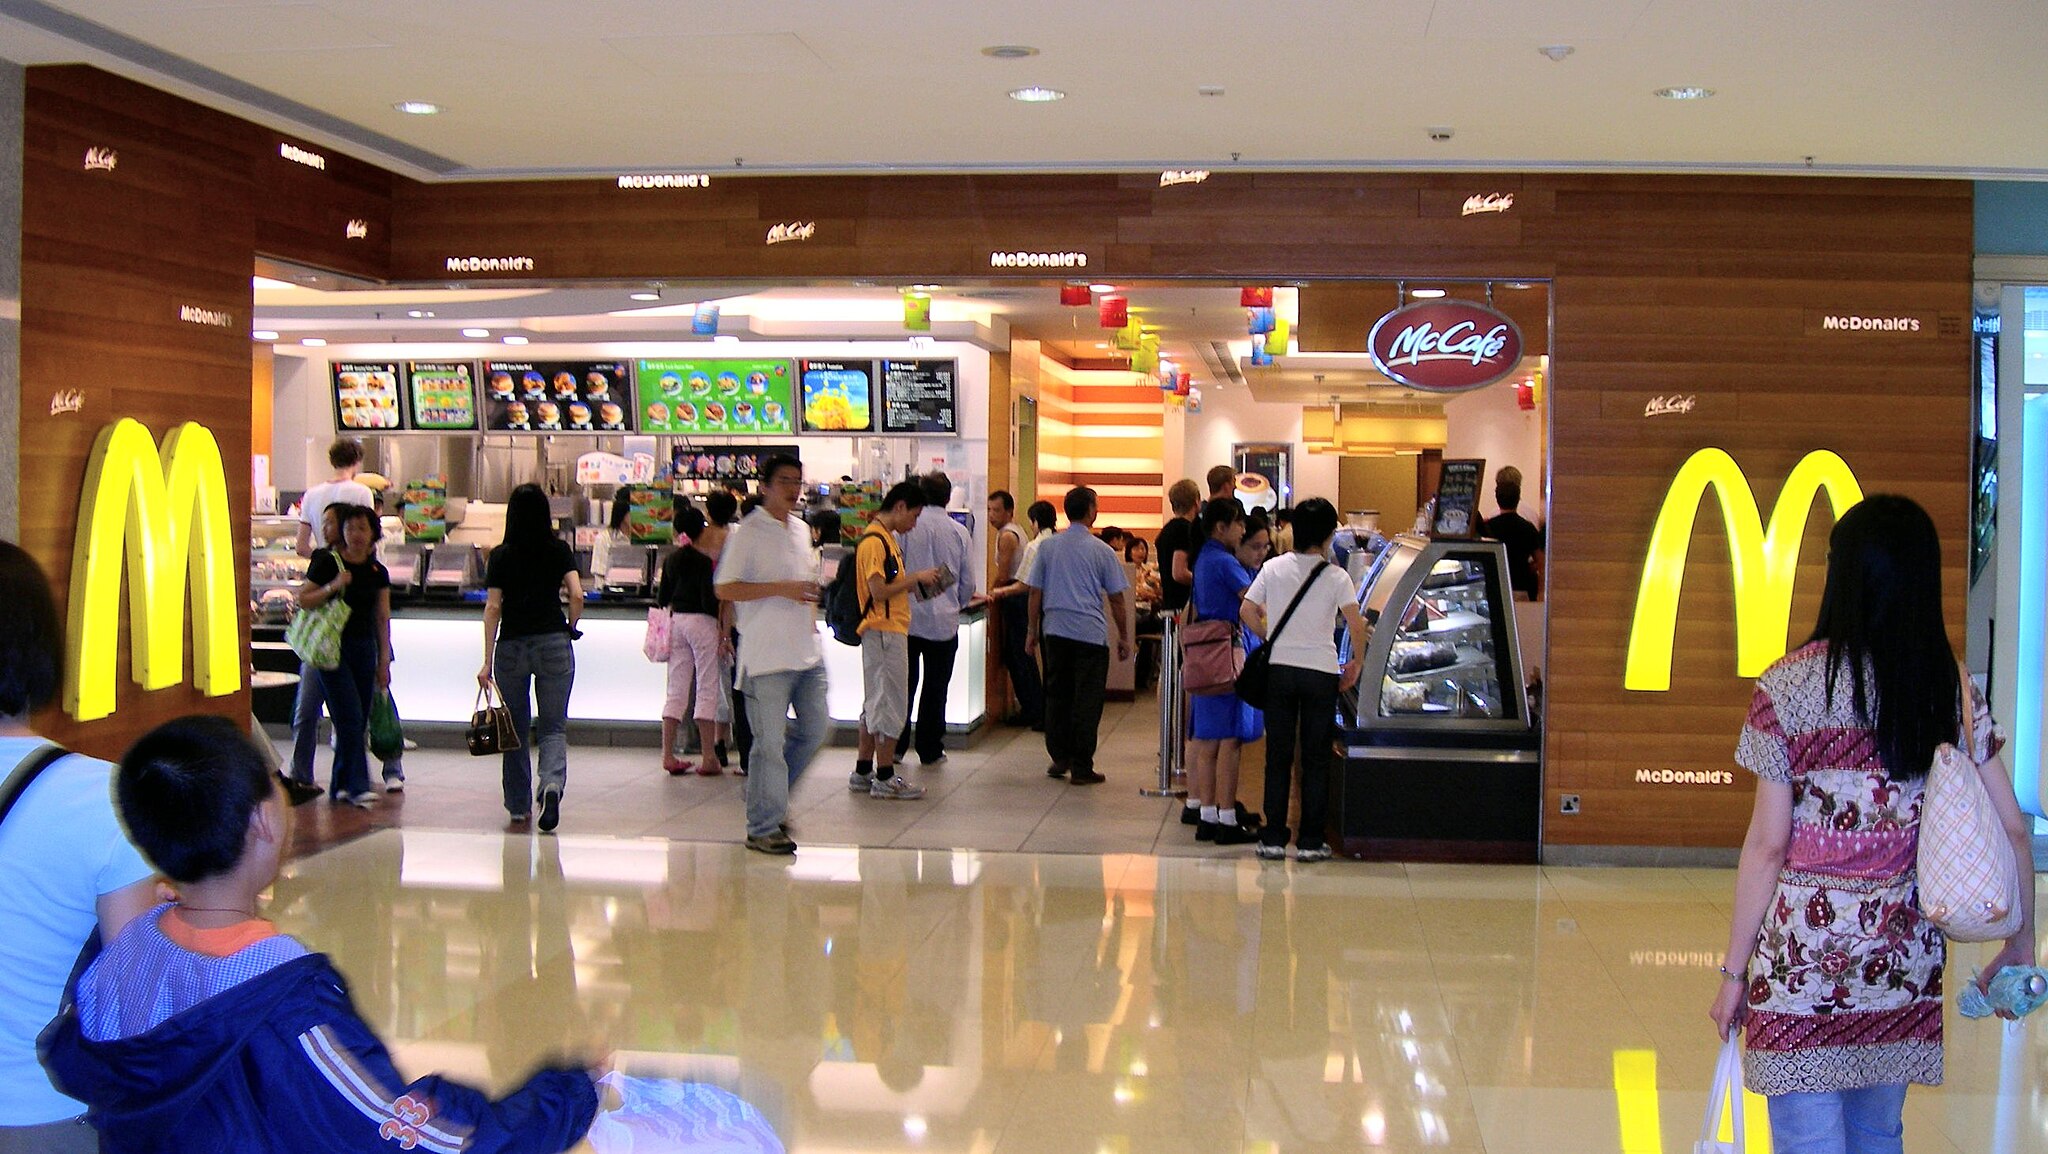 McDonald's in IFC Mall, Hong Kong